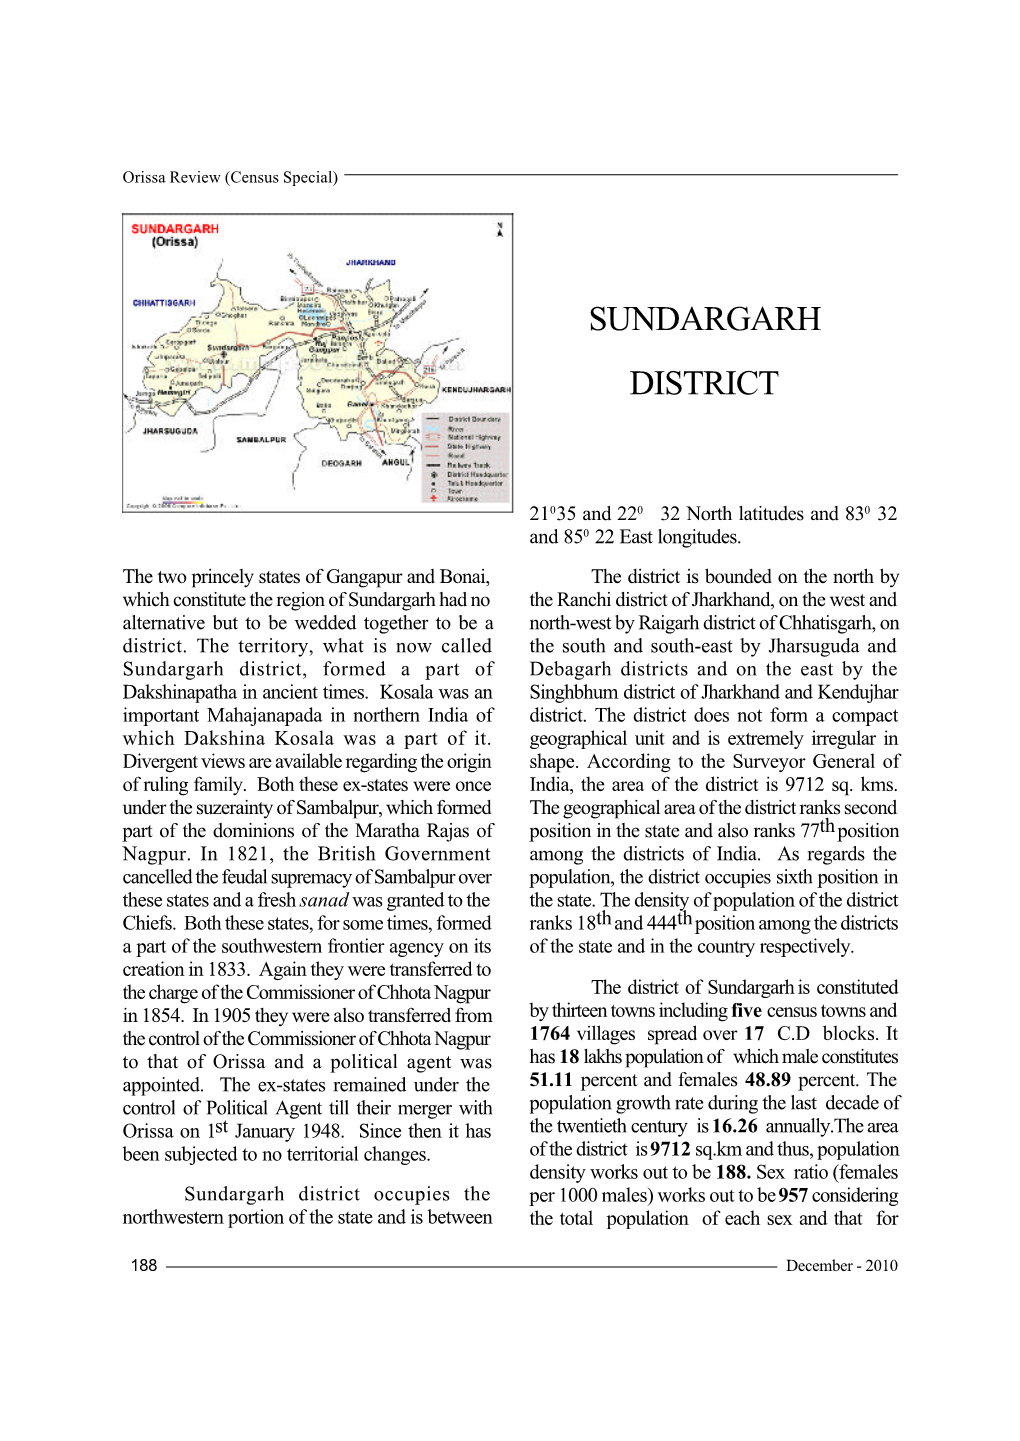 Sundargarh District